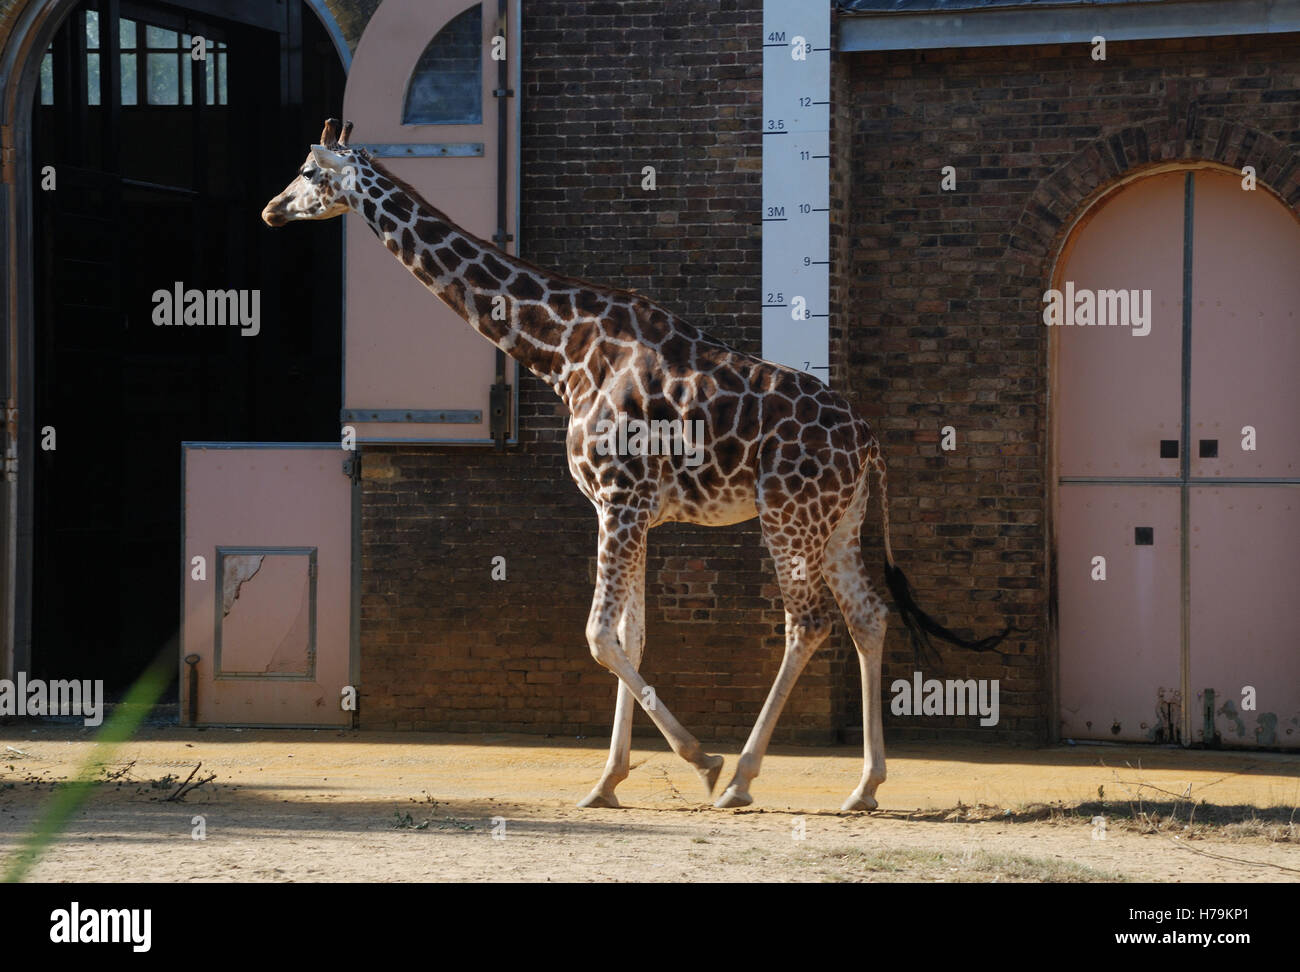 Giraffes at London Zoo, UK. Stock Photo